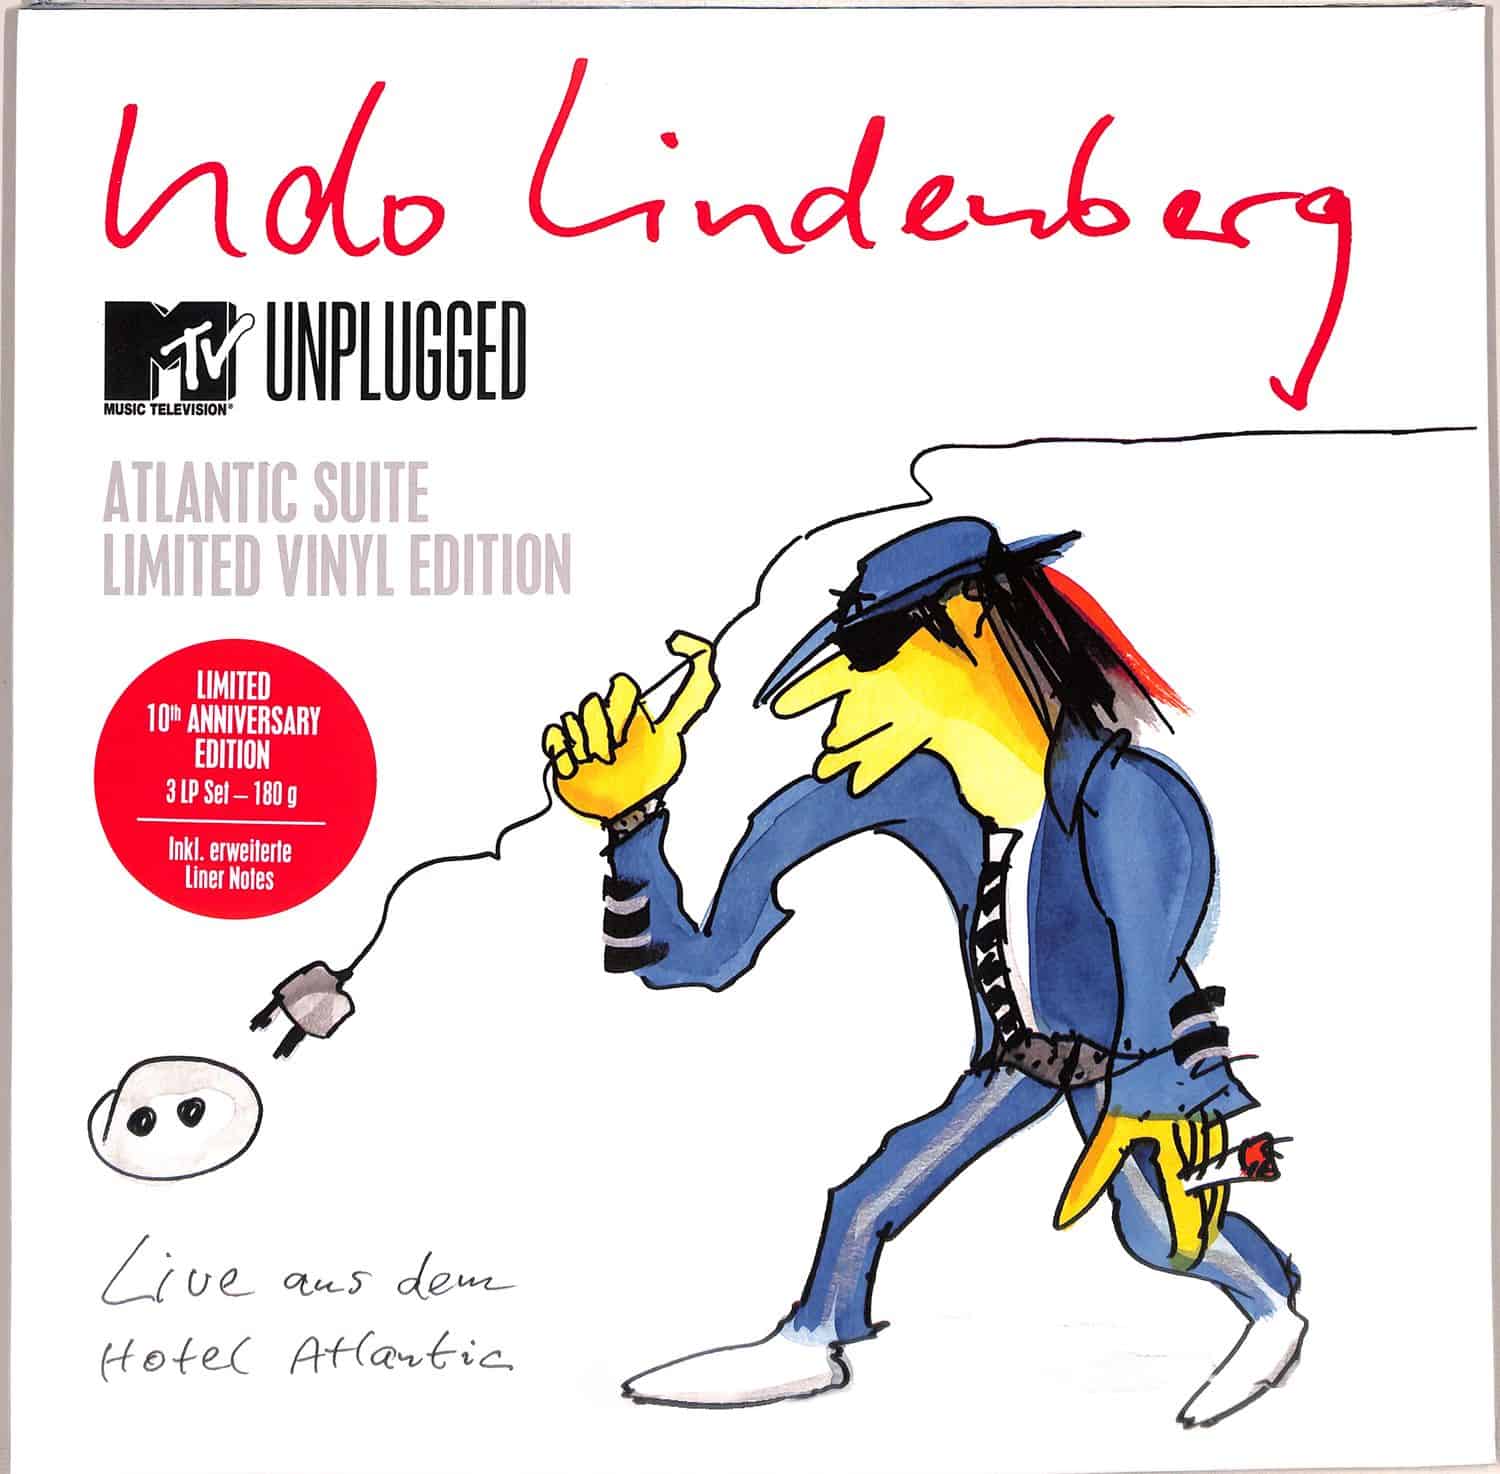 Udo Lindenberg - MTV UNPLUGGED ATLANTIC SUITE 